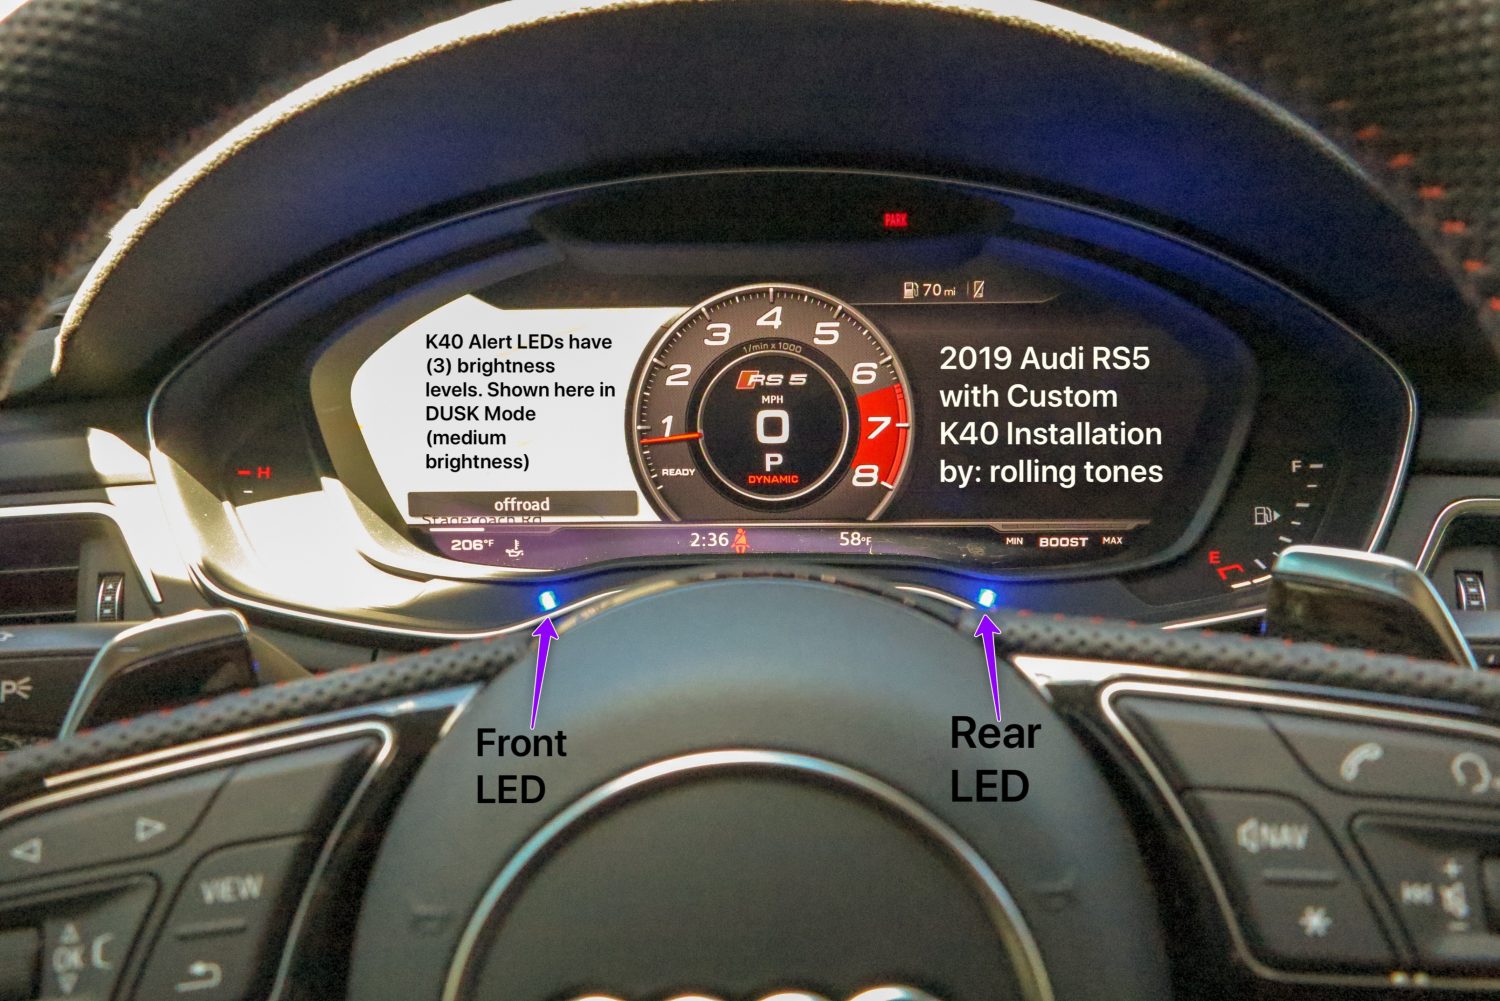 Custom K40 Police Radar Detector Alert LED's Installed on 2019 Audi RS5 in Charlotte, NC